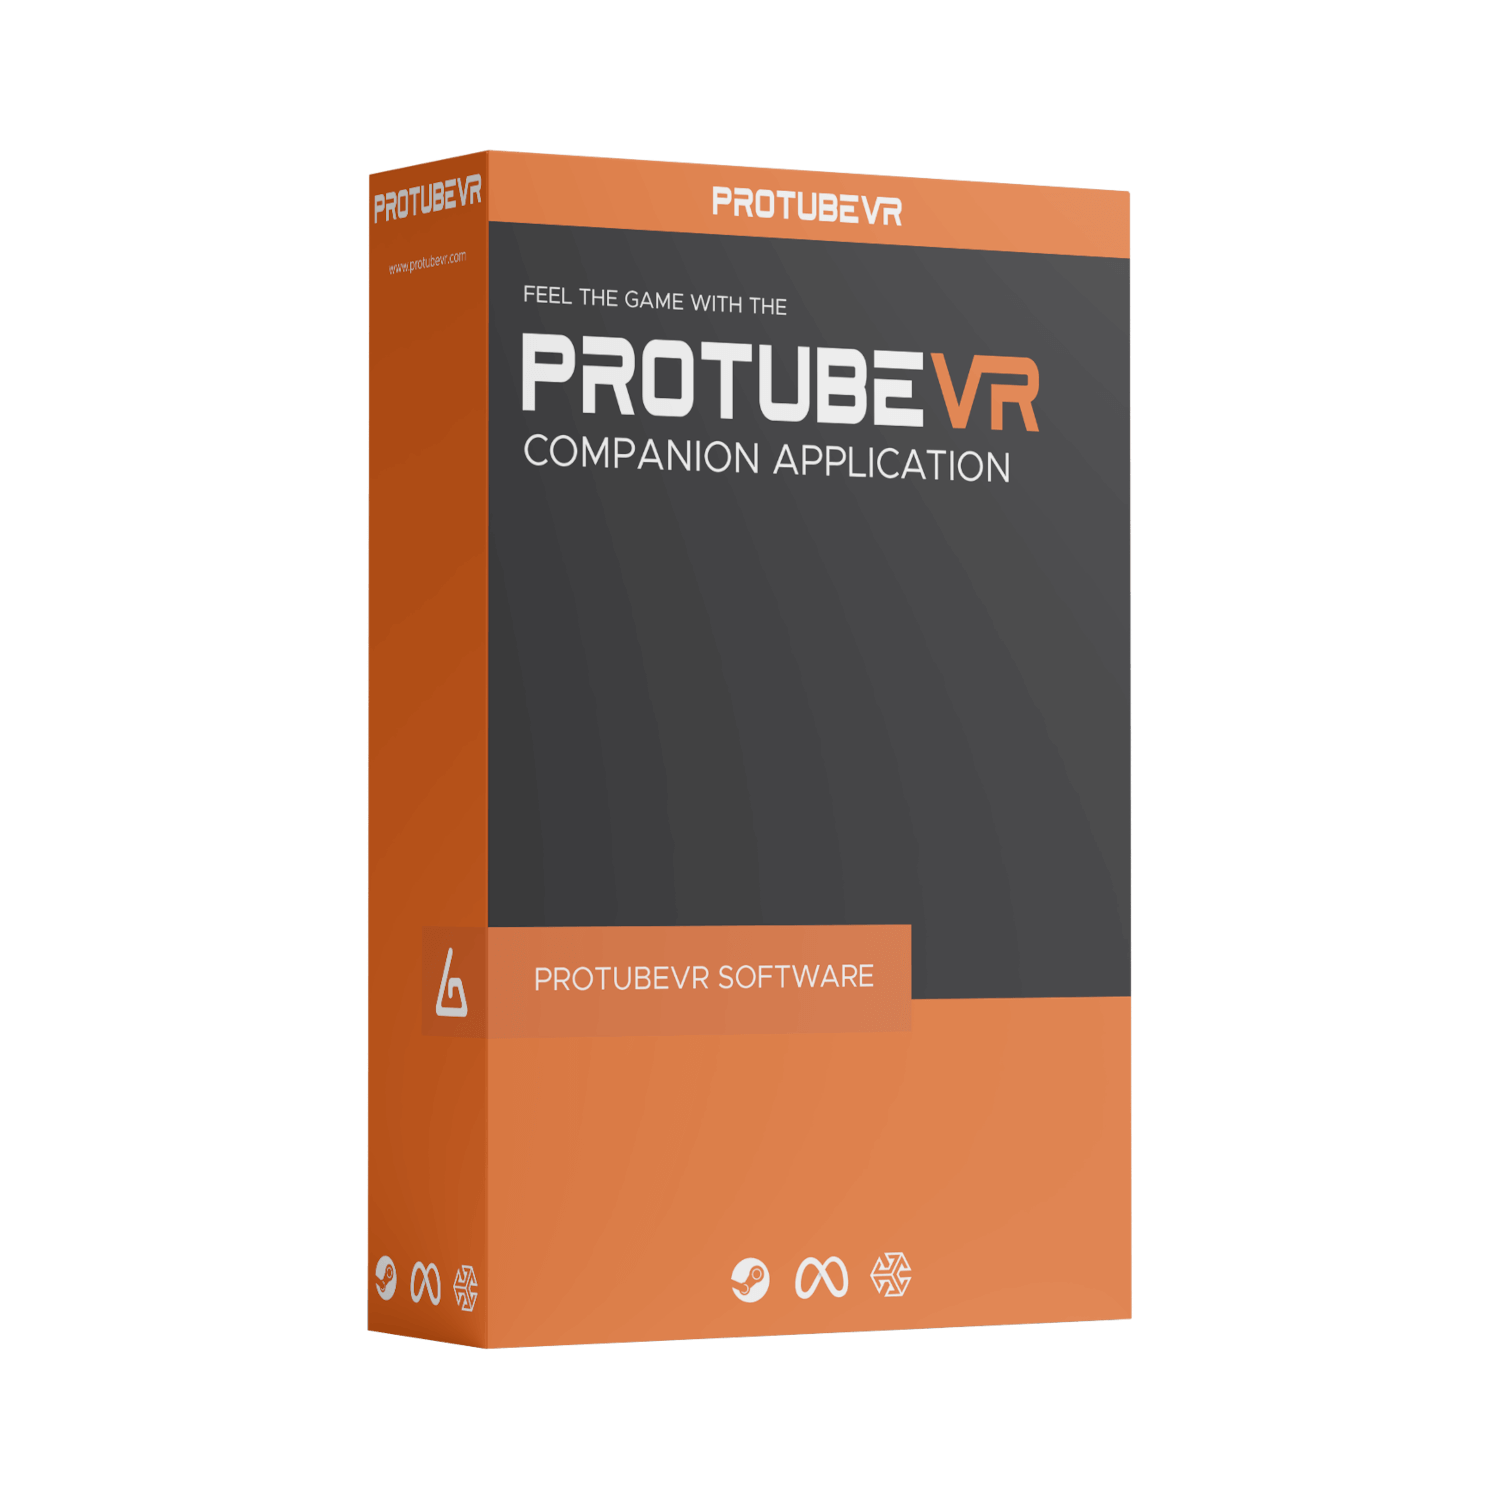 Orange and Black software box for ProTubeVR Companion App